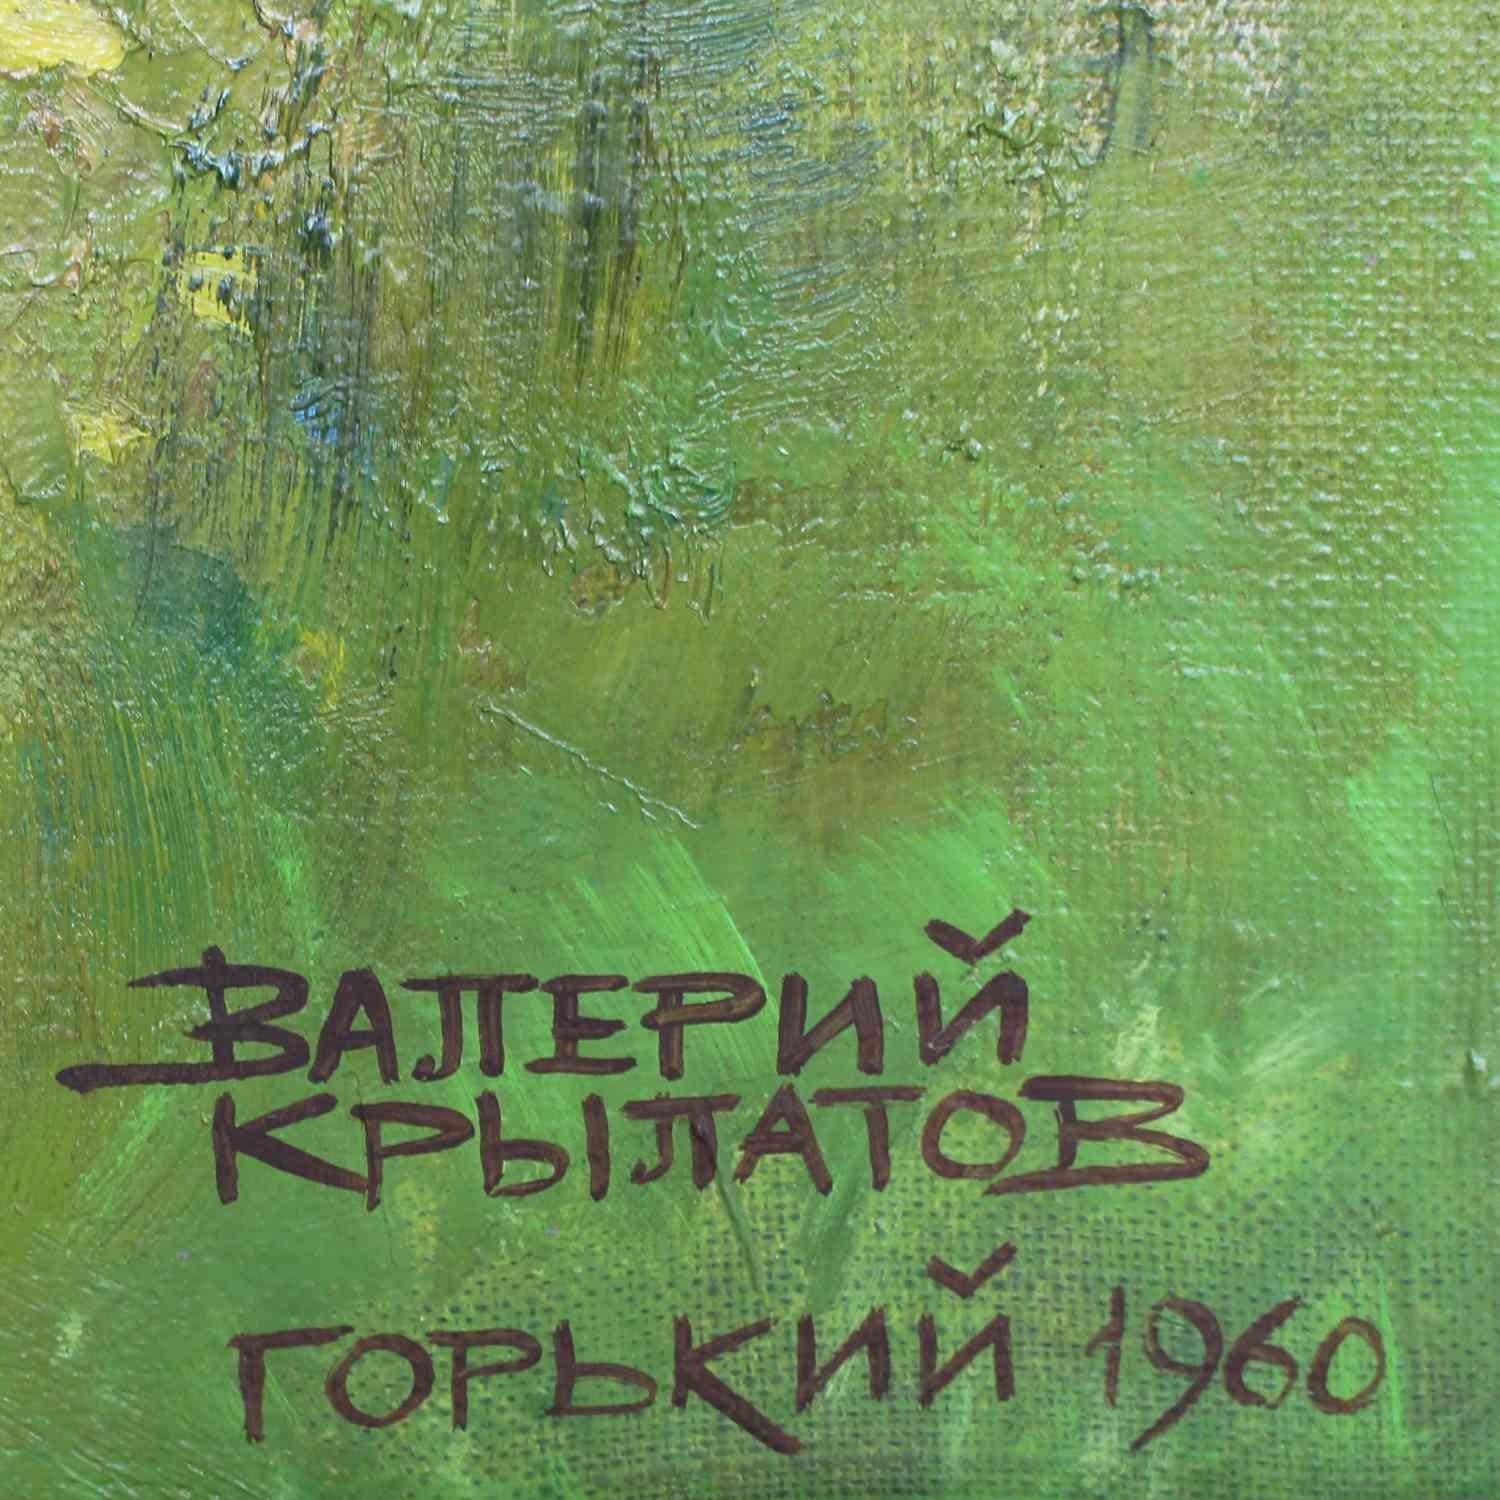 Valeriy Krilatov Oil on Canvas 1